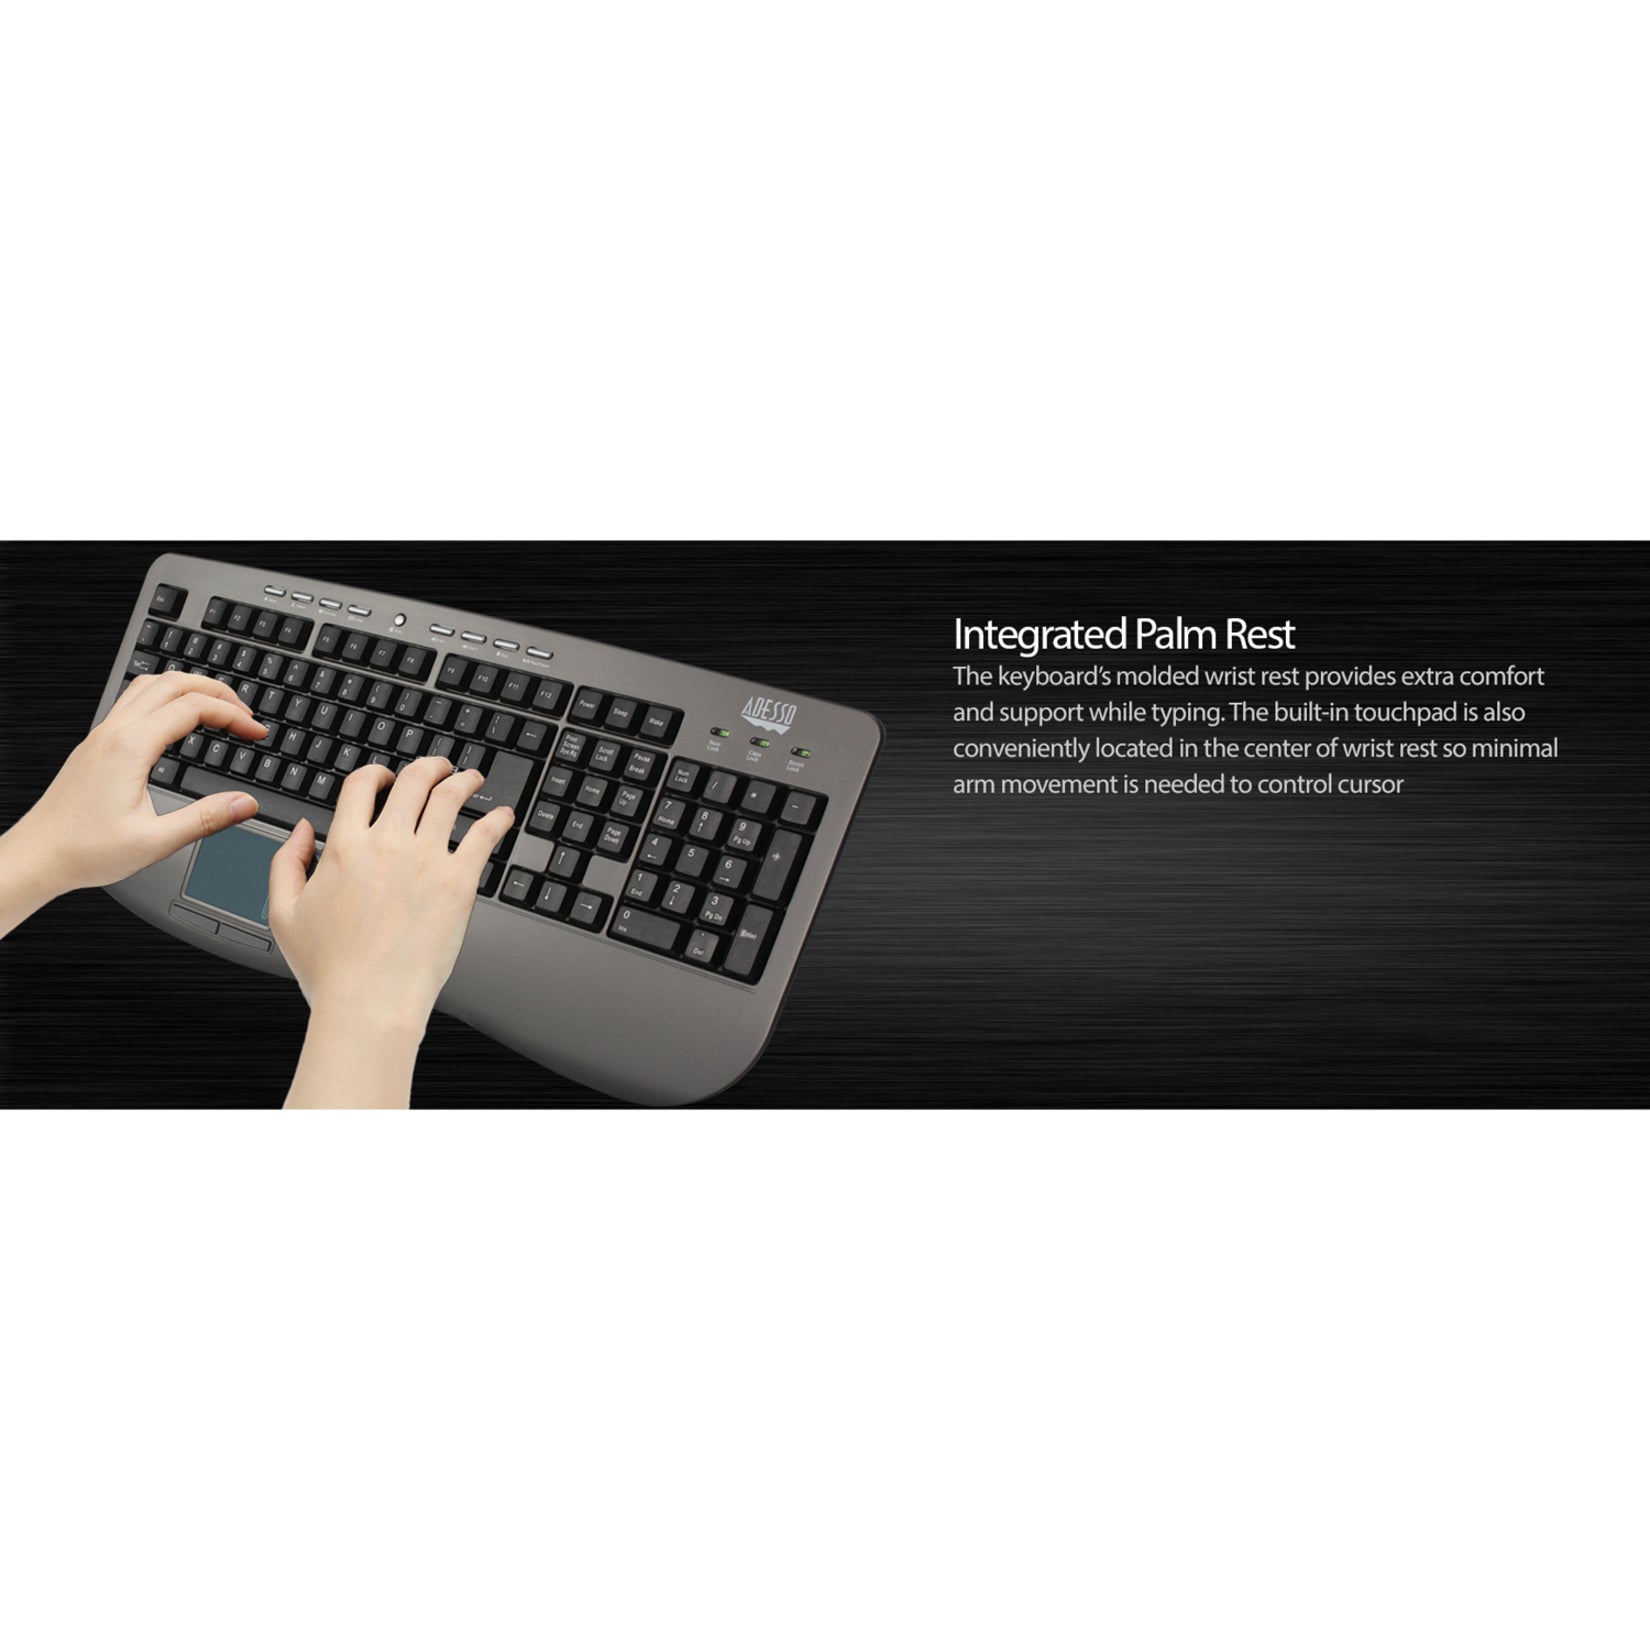 Adesso AKB-430UG Win-Touch Pro USB Keyboard, Graphite, Quiet Keys, Wrist Rest, Lightweight, Slim, Palm Rest